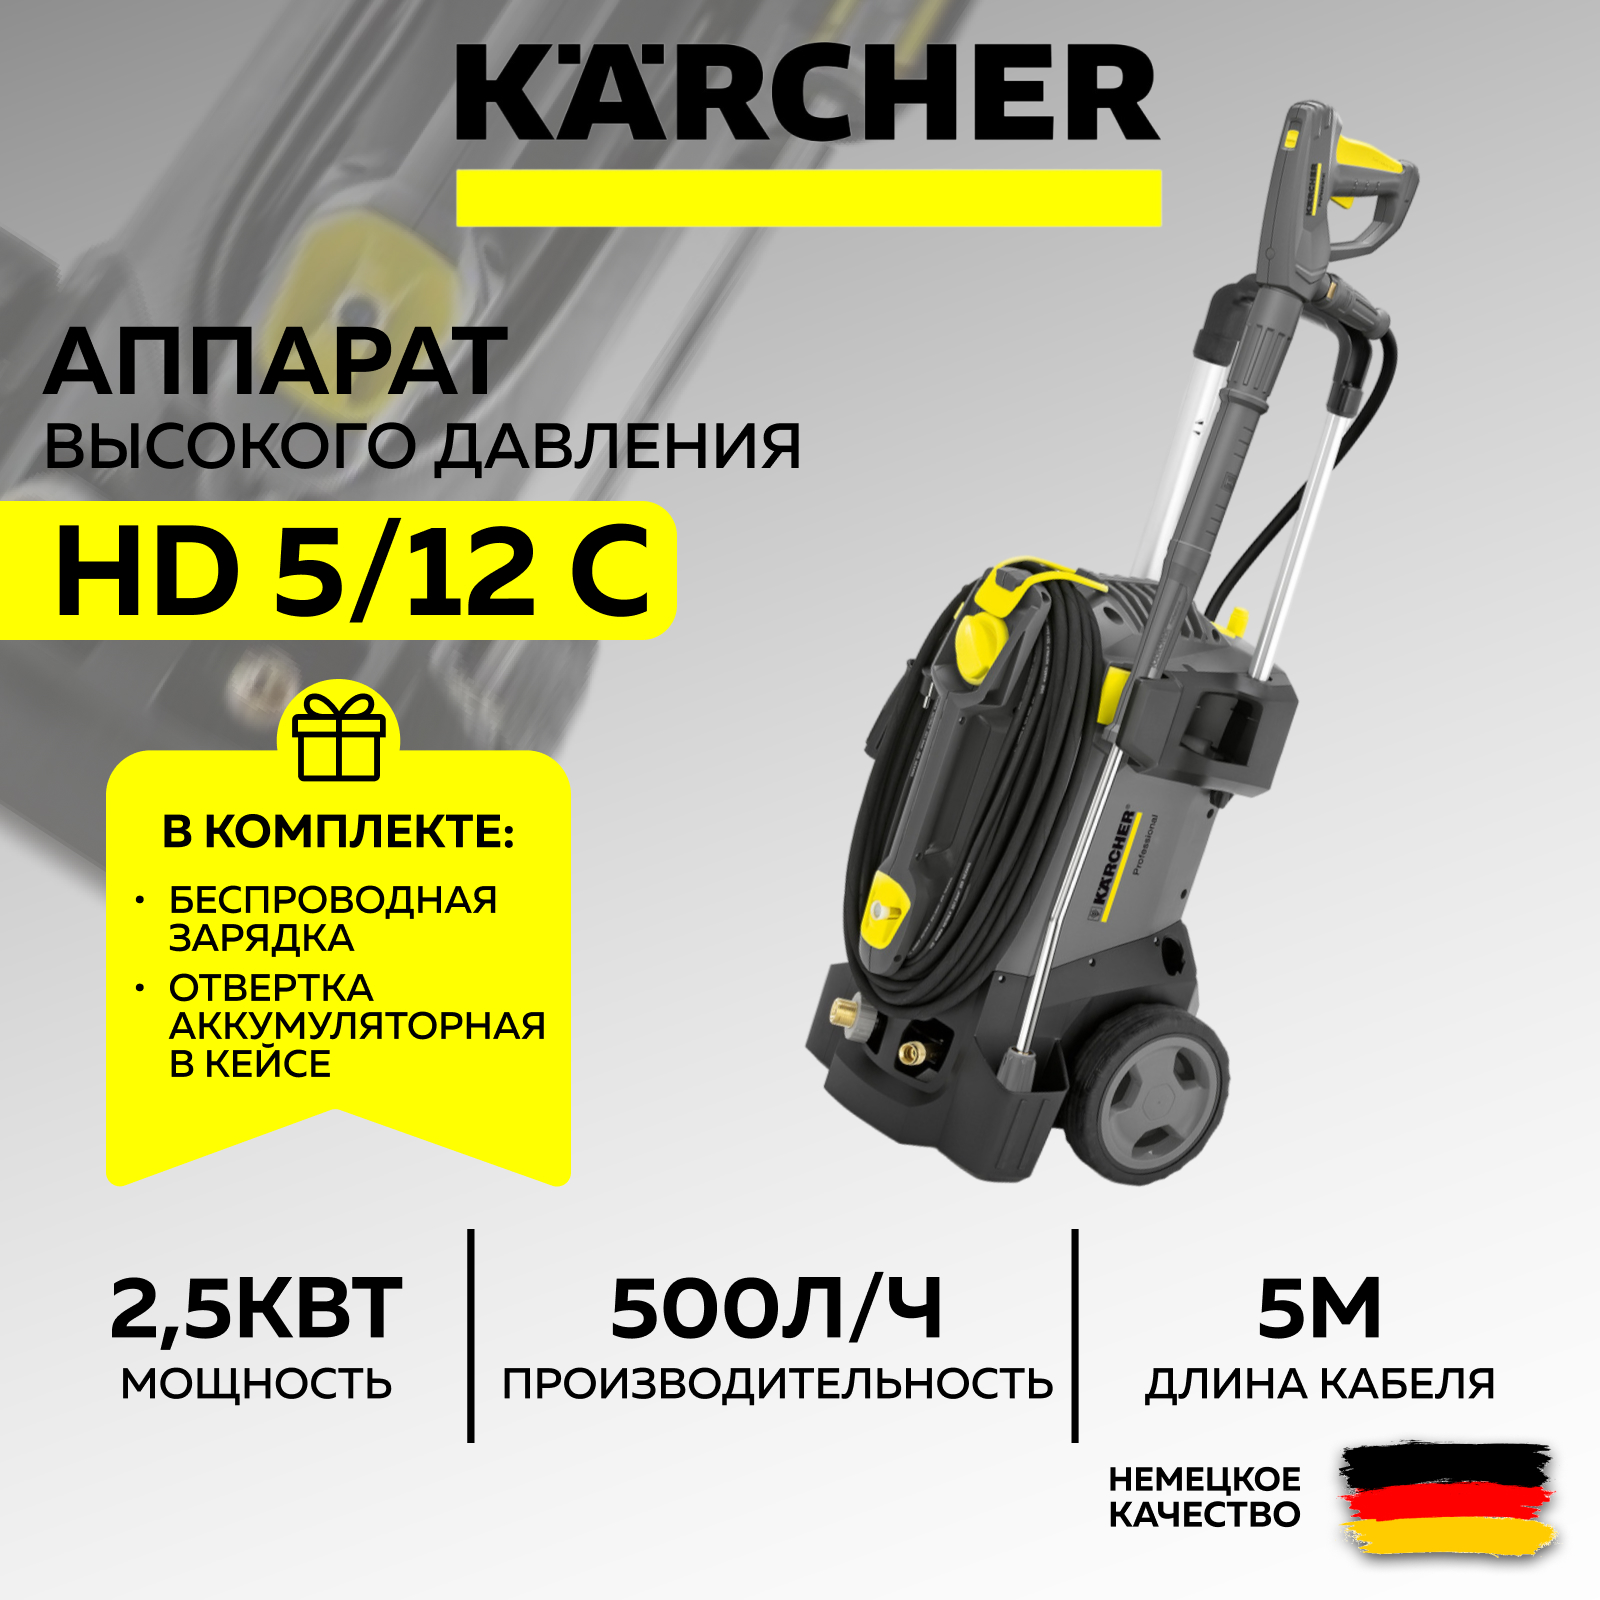 Аппарат без нагрева воды Karcher HD 5 12 C EASY+Отвертка аккумуляторная + Ночник-зарядка